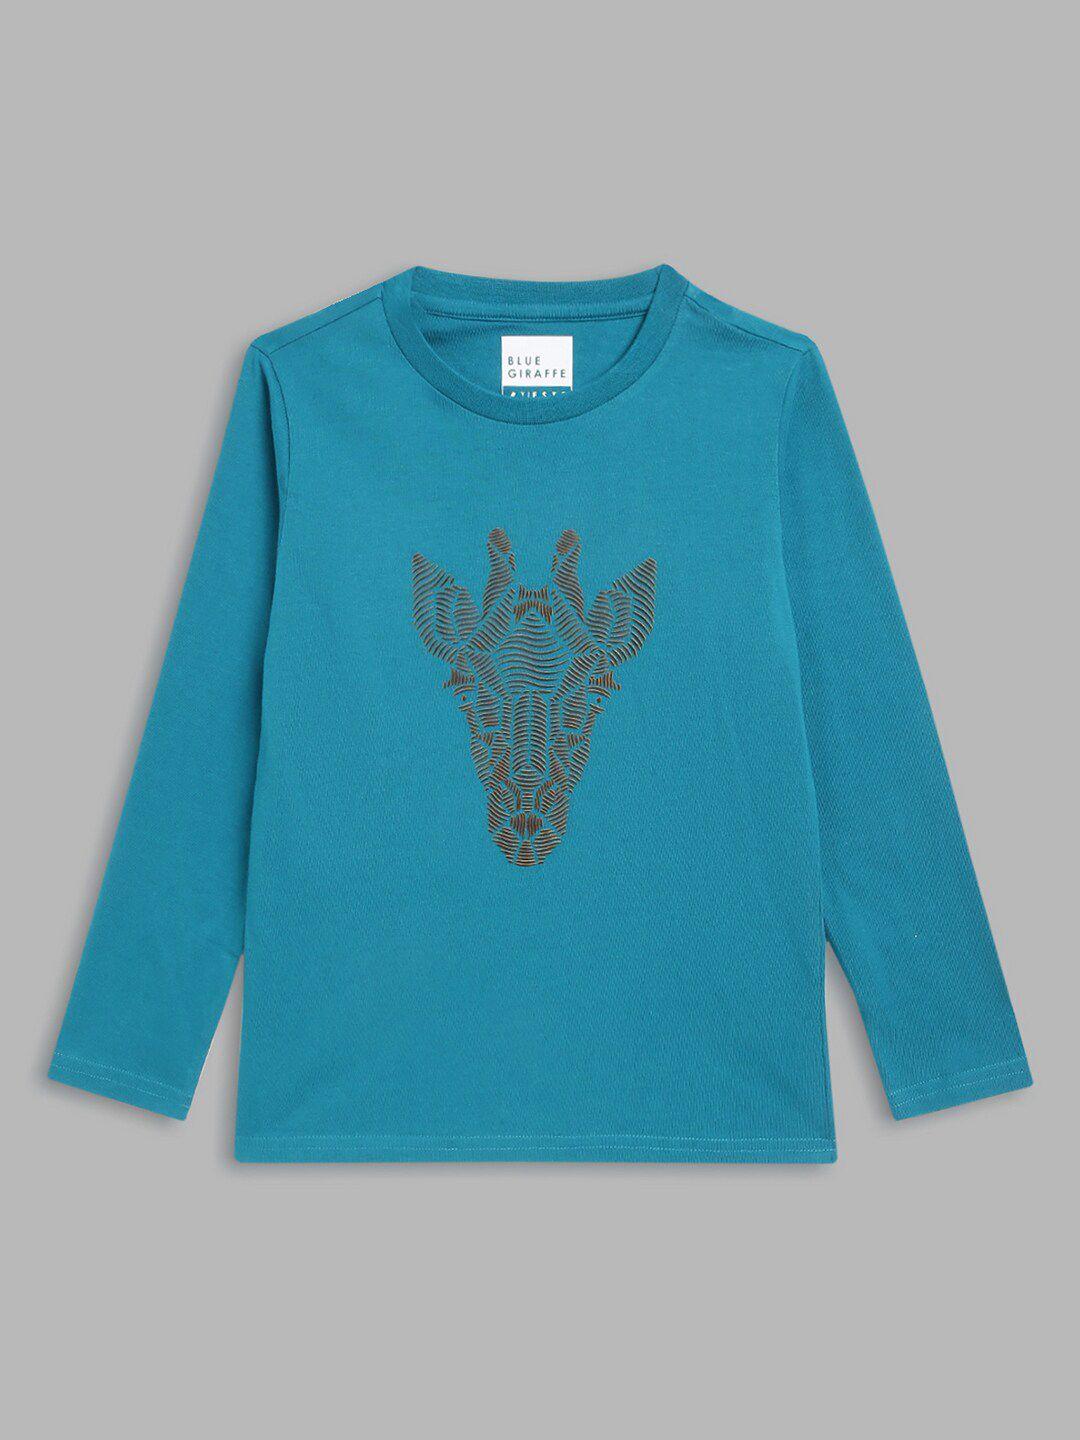 blue giraffe boys teal printed sweatshirt